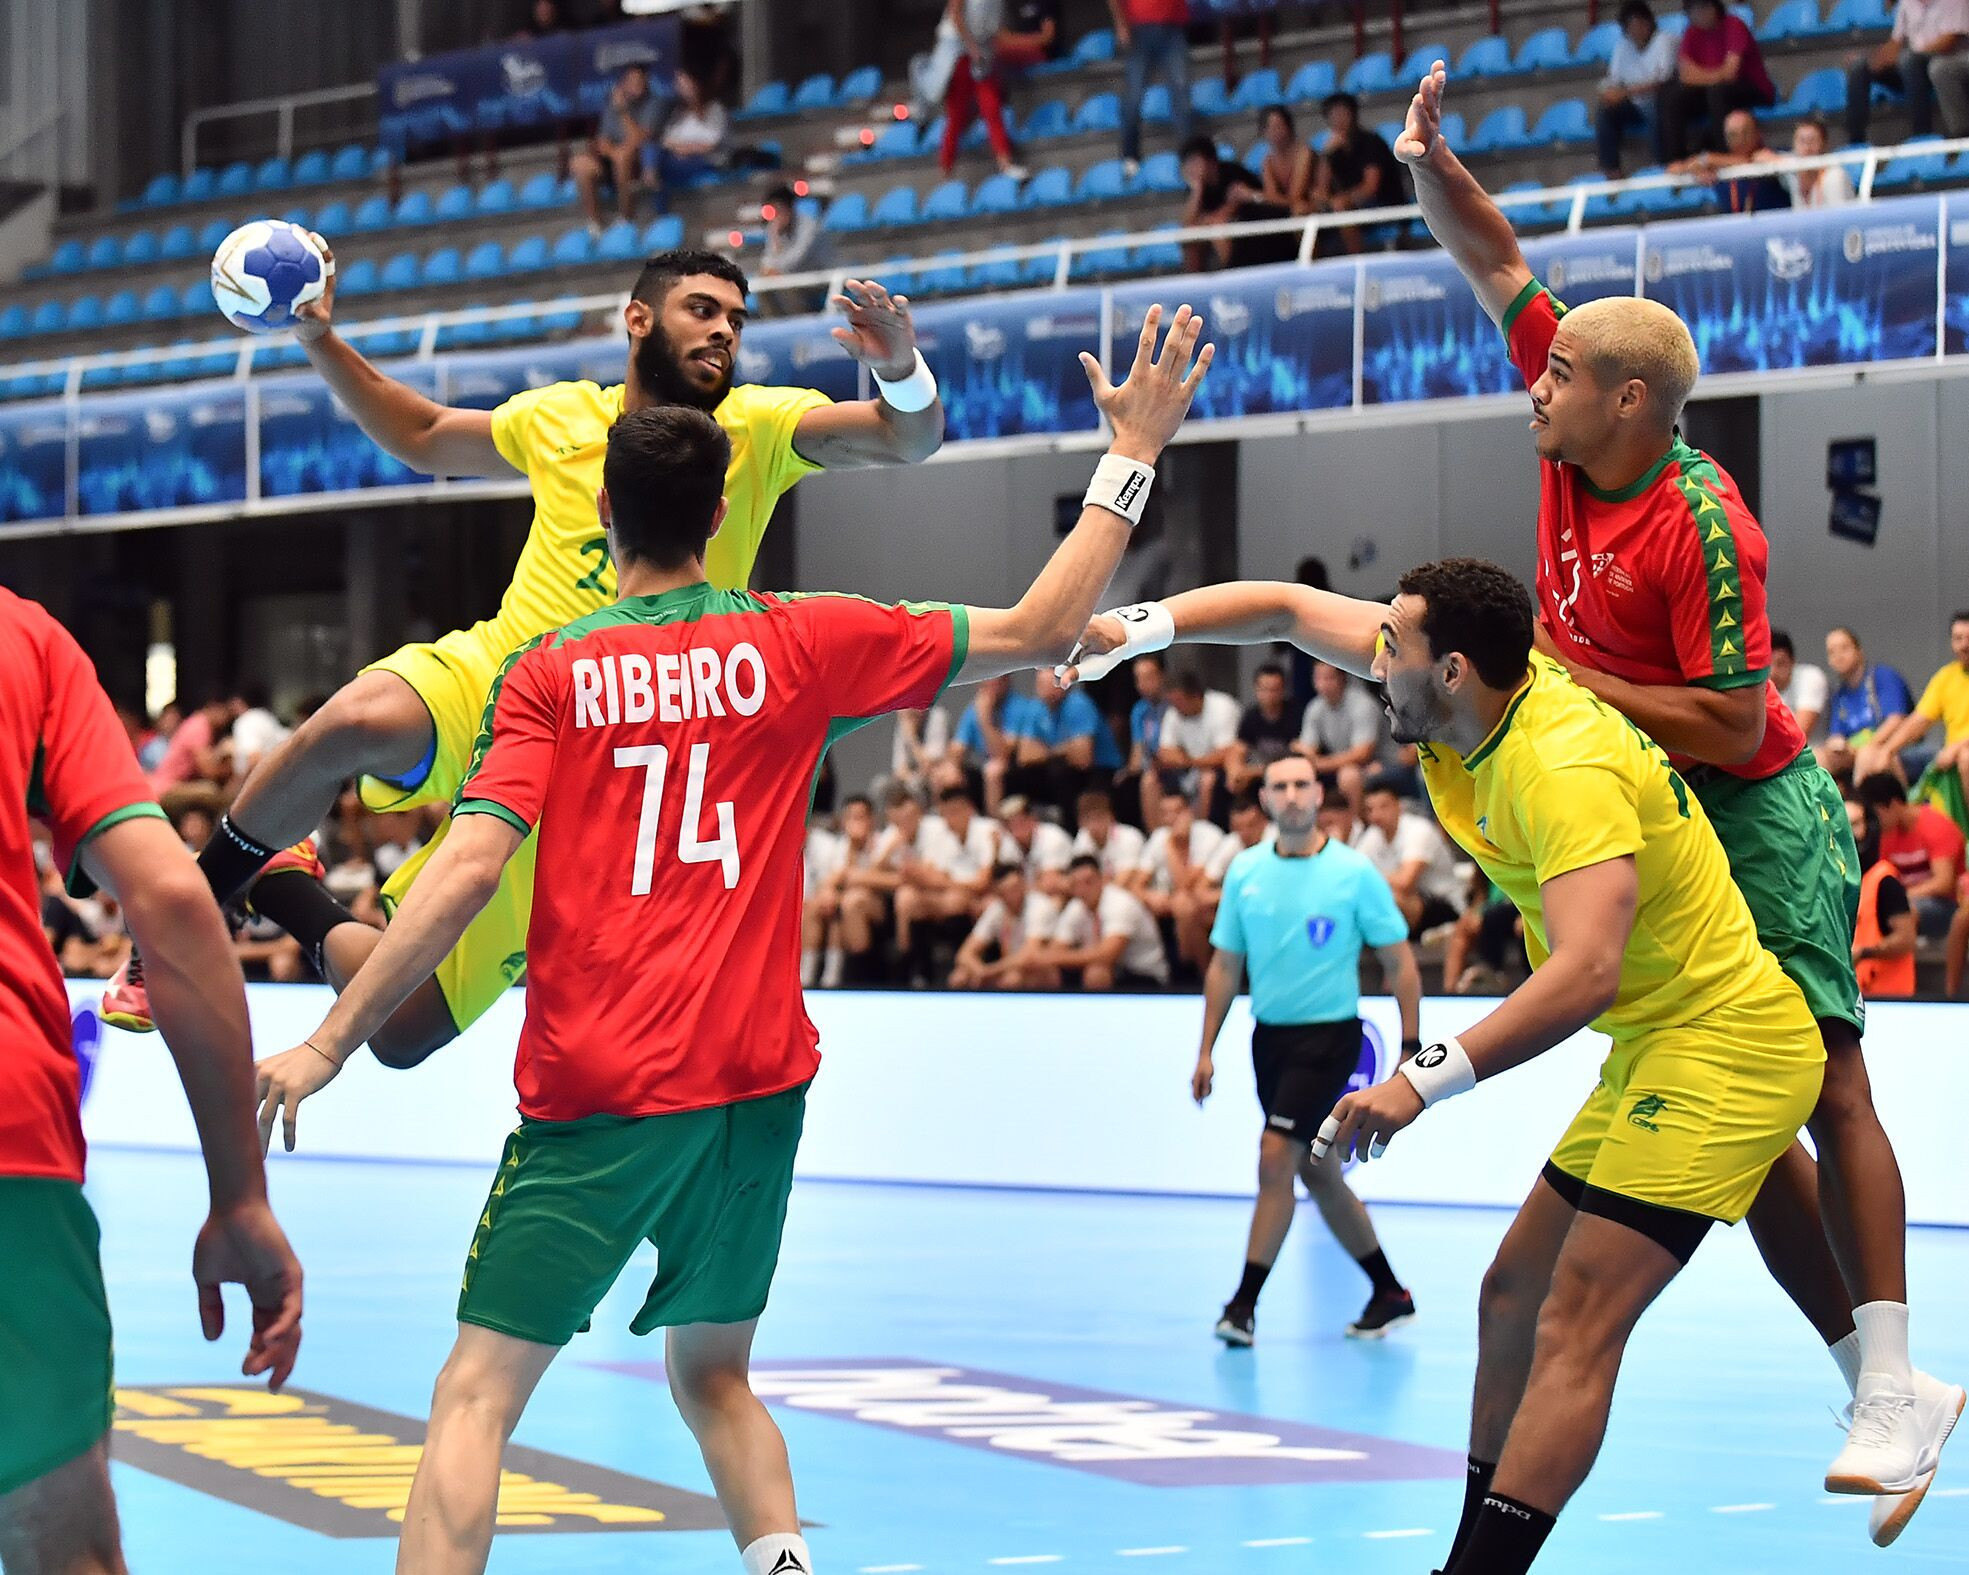 Brazil got the better of Portugal at the Men's Junior World Handball Championship ©IHF/Twitter